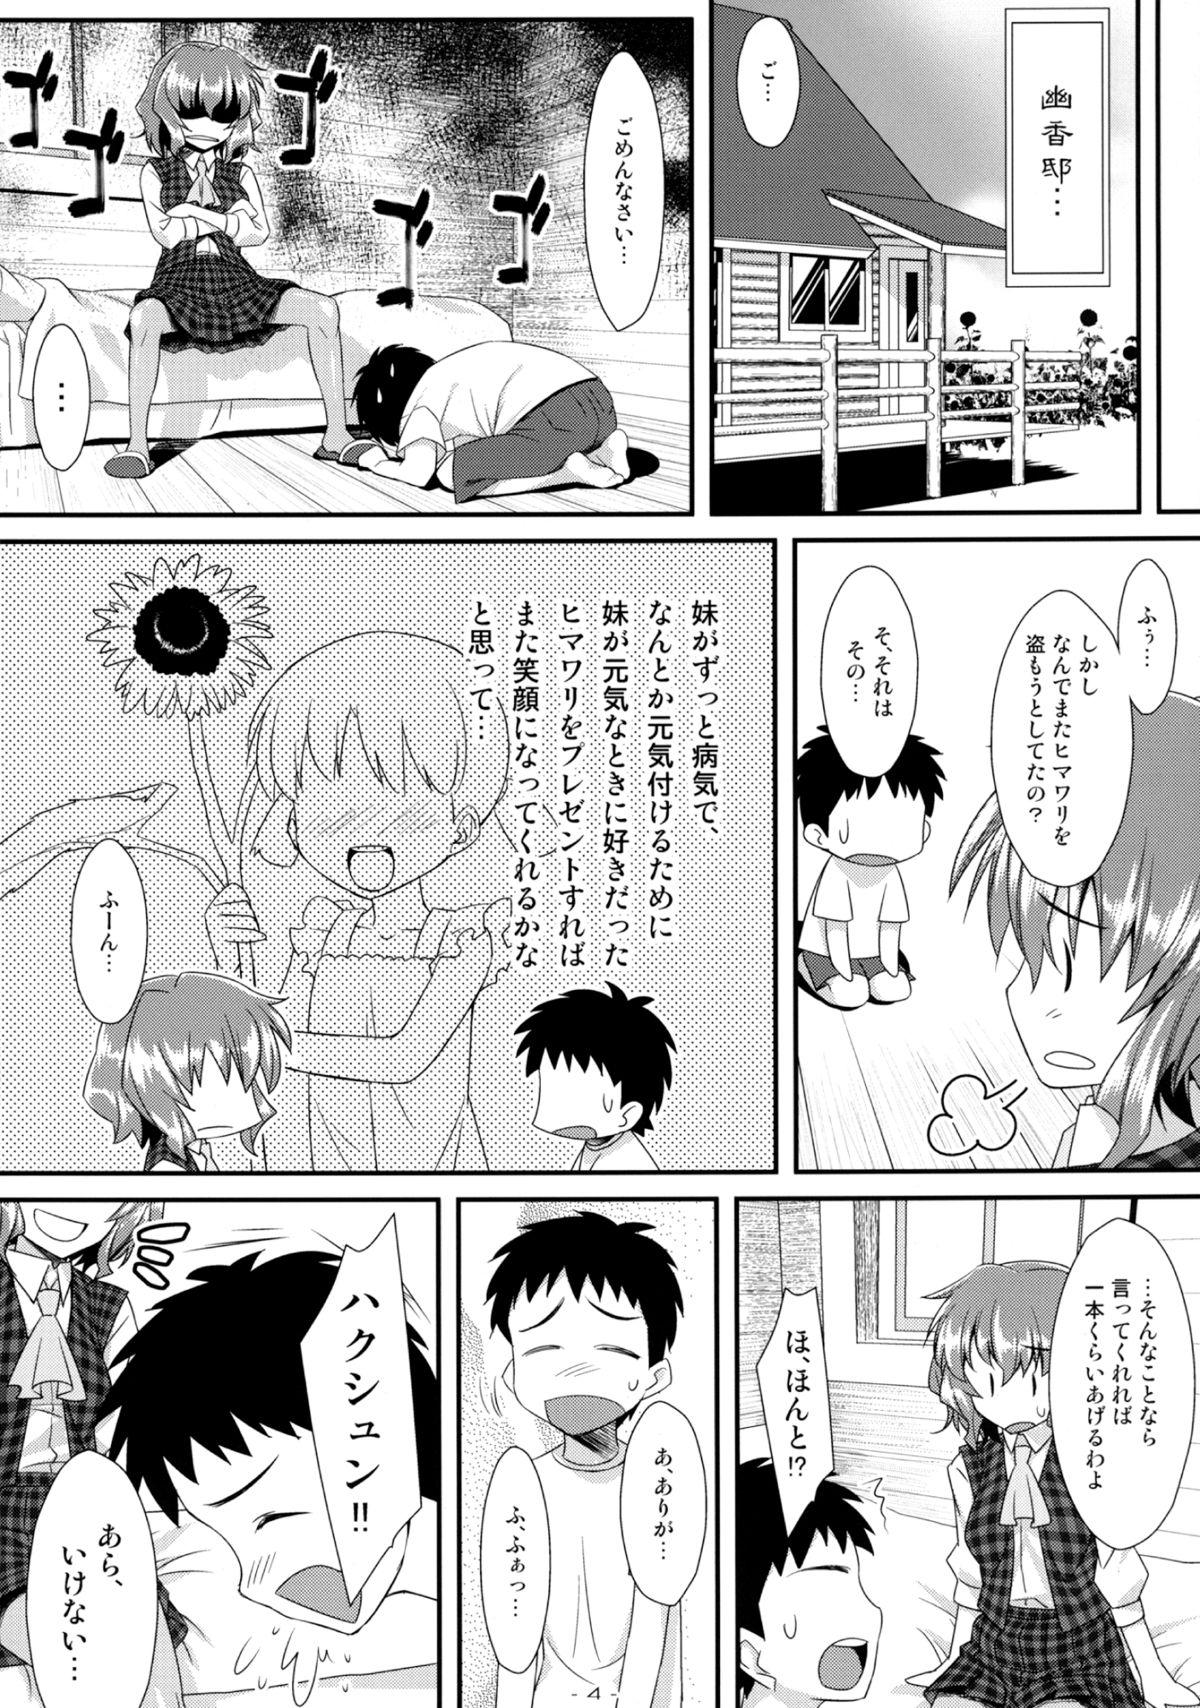 Chupando Yasei no Chijo ga Arawareta! 5 - Touhou project Couch - Page 4